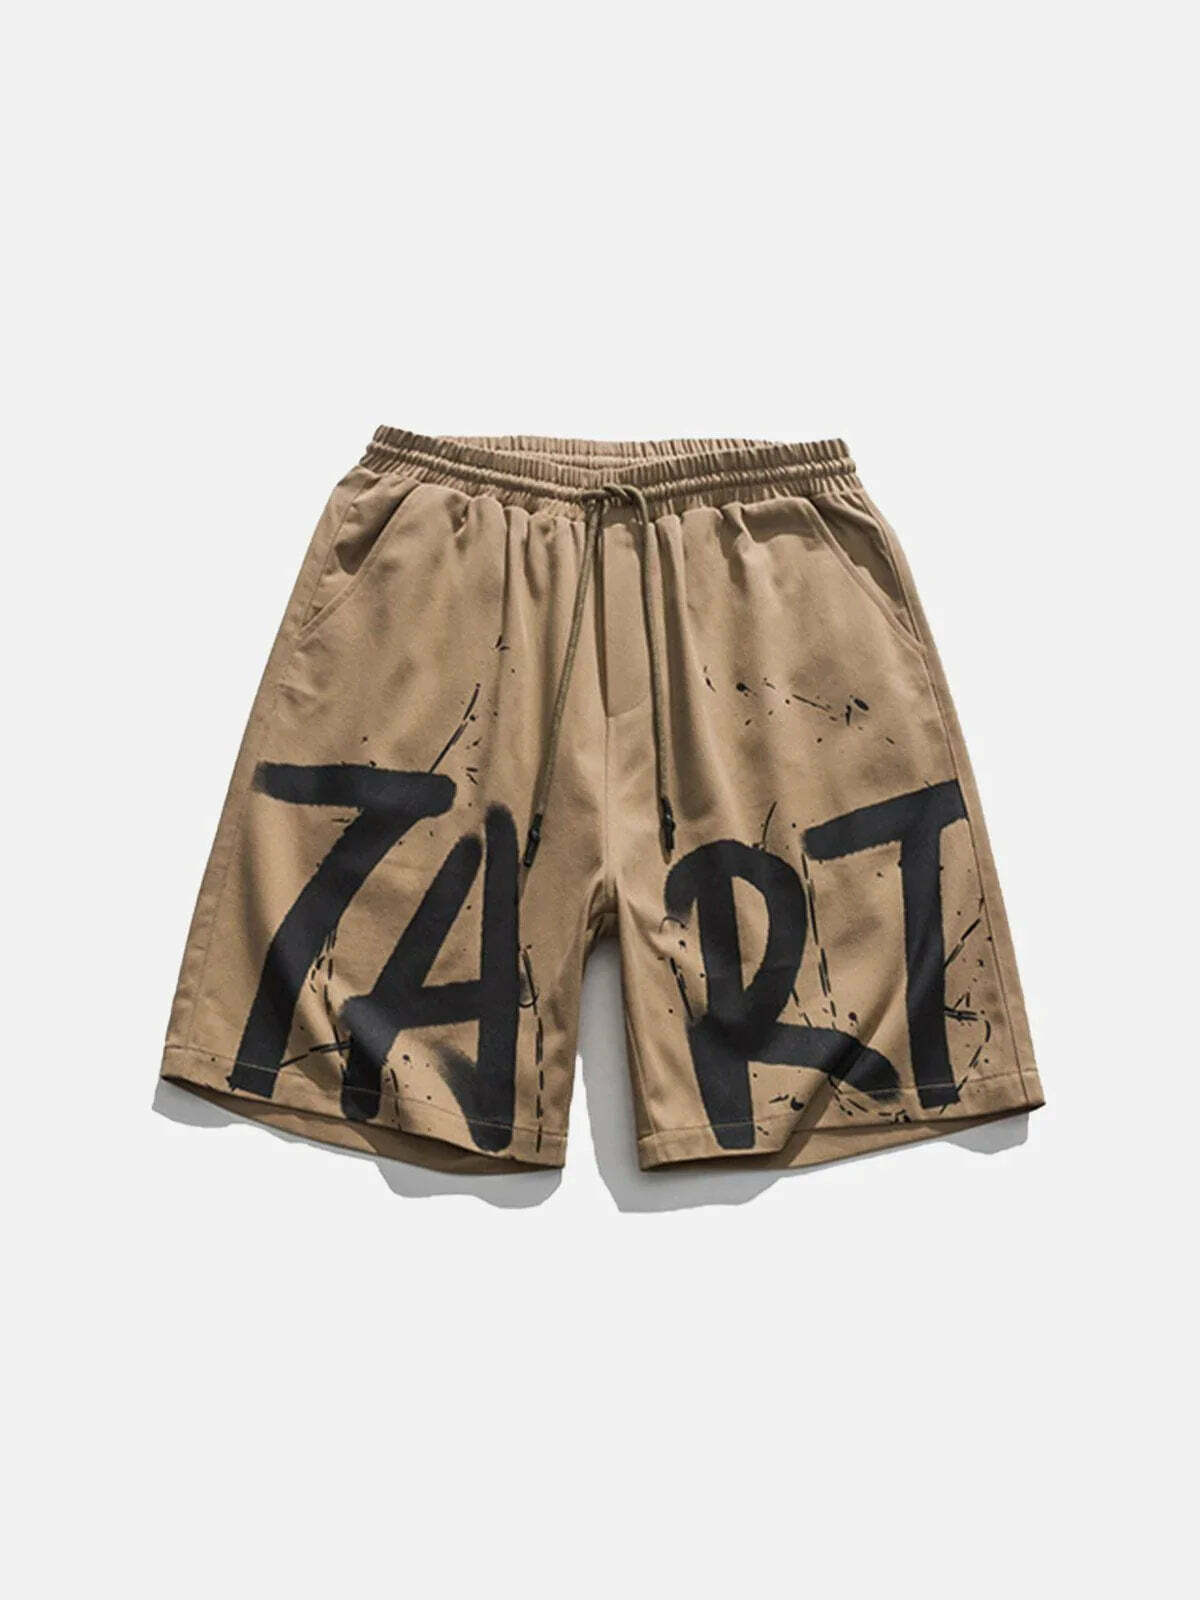 urban graffiti print shorts edgy & vibrant streetwear 6314